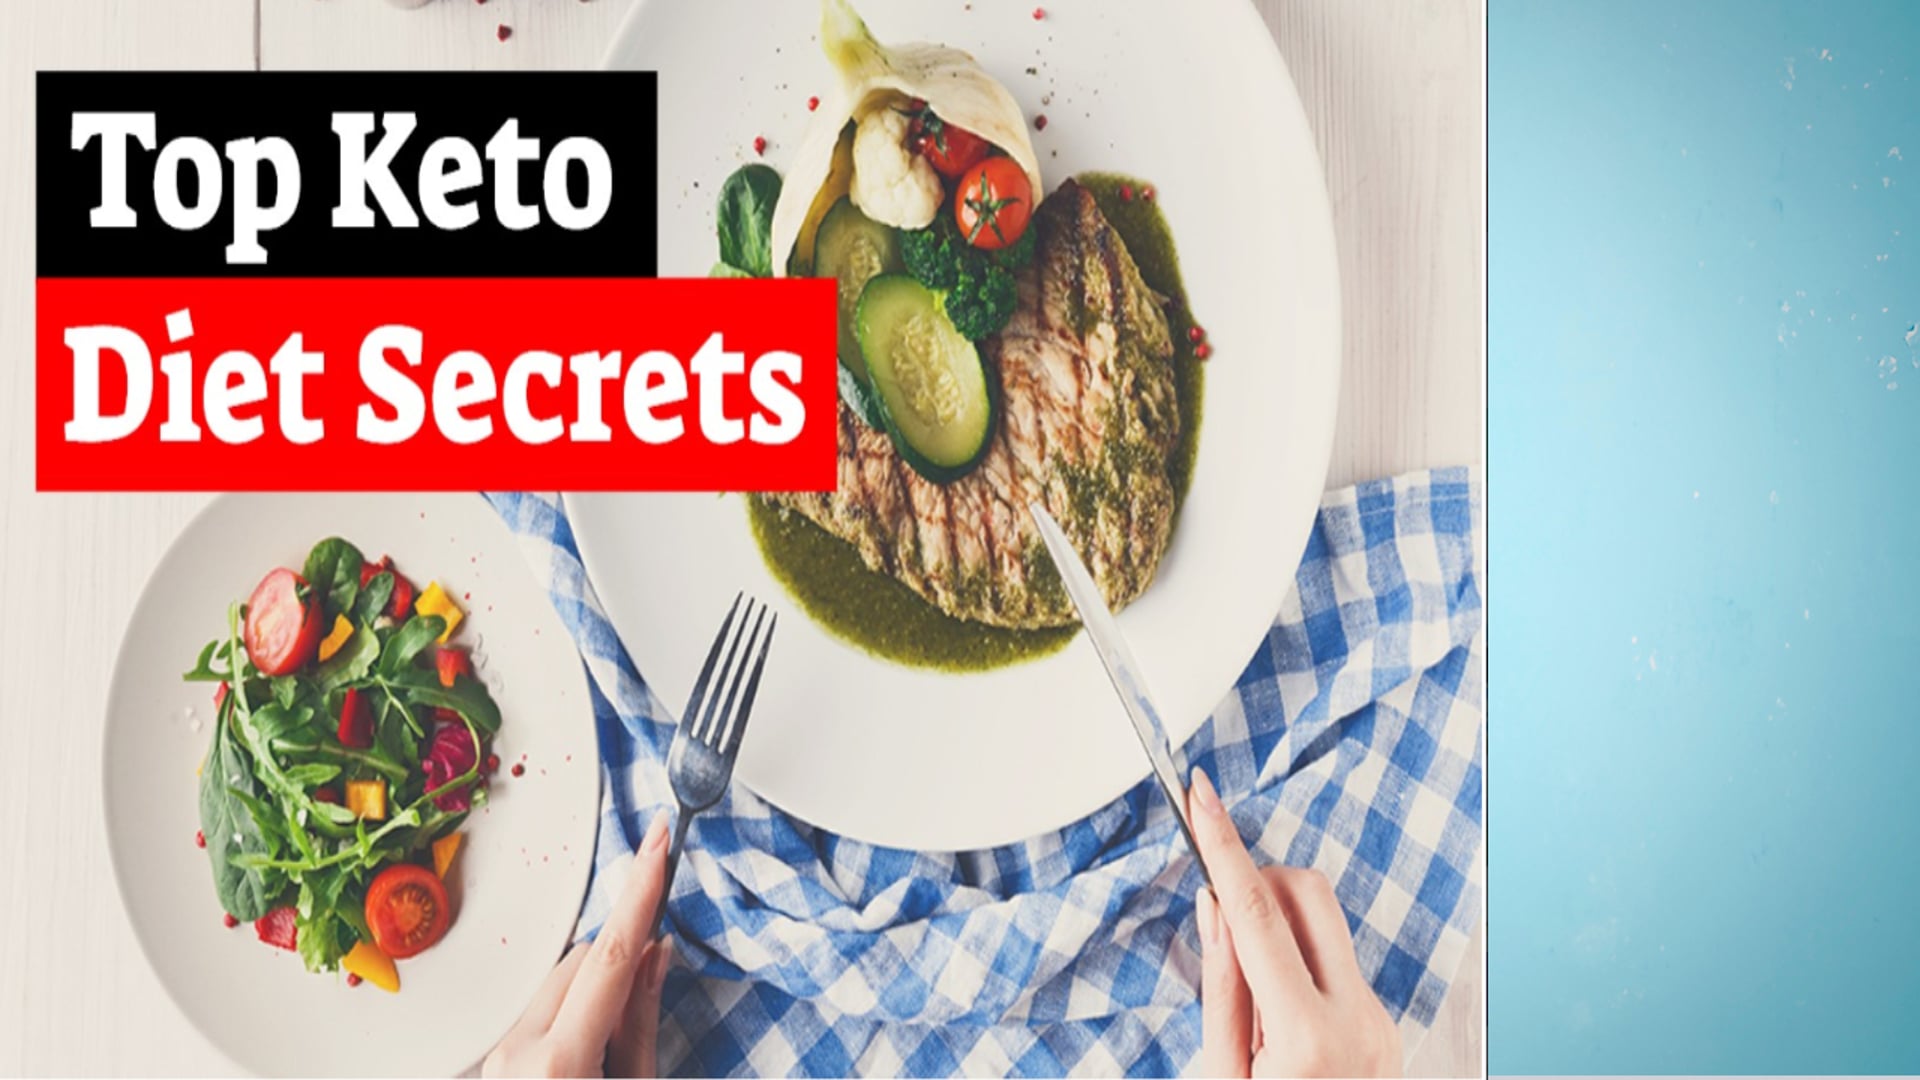 Keto diet for beginners, recipes, Keto foods, Keto meal plan,